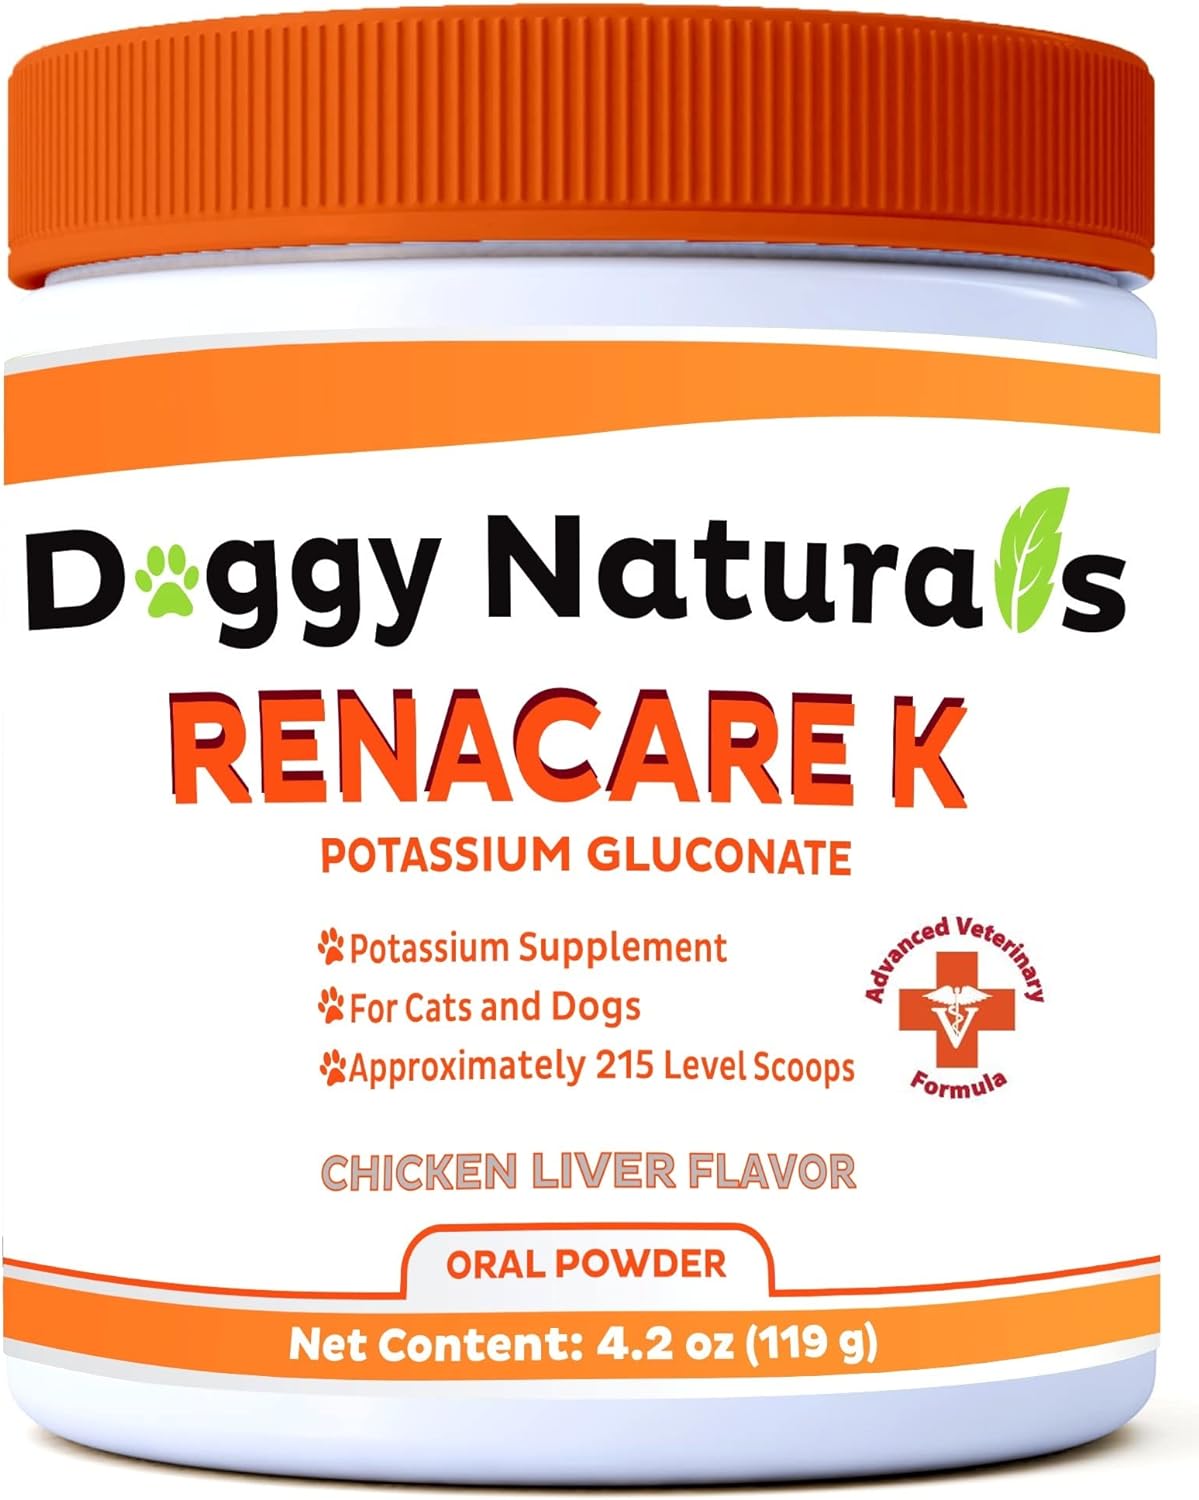 Doggy Naturals RenaCare K is for Renal K (Potassium Gluconate) Potassium Supplement Powder